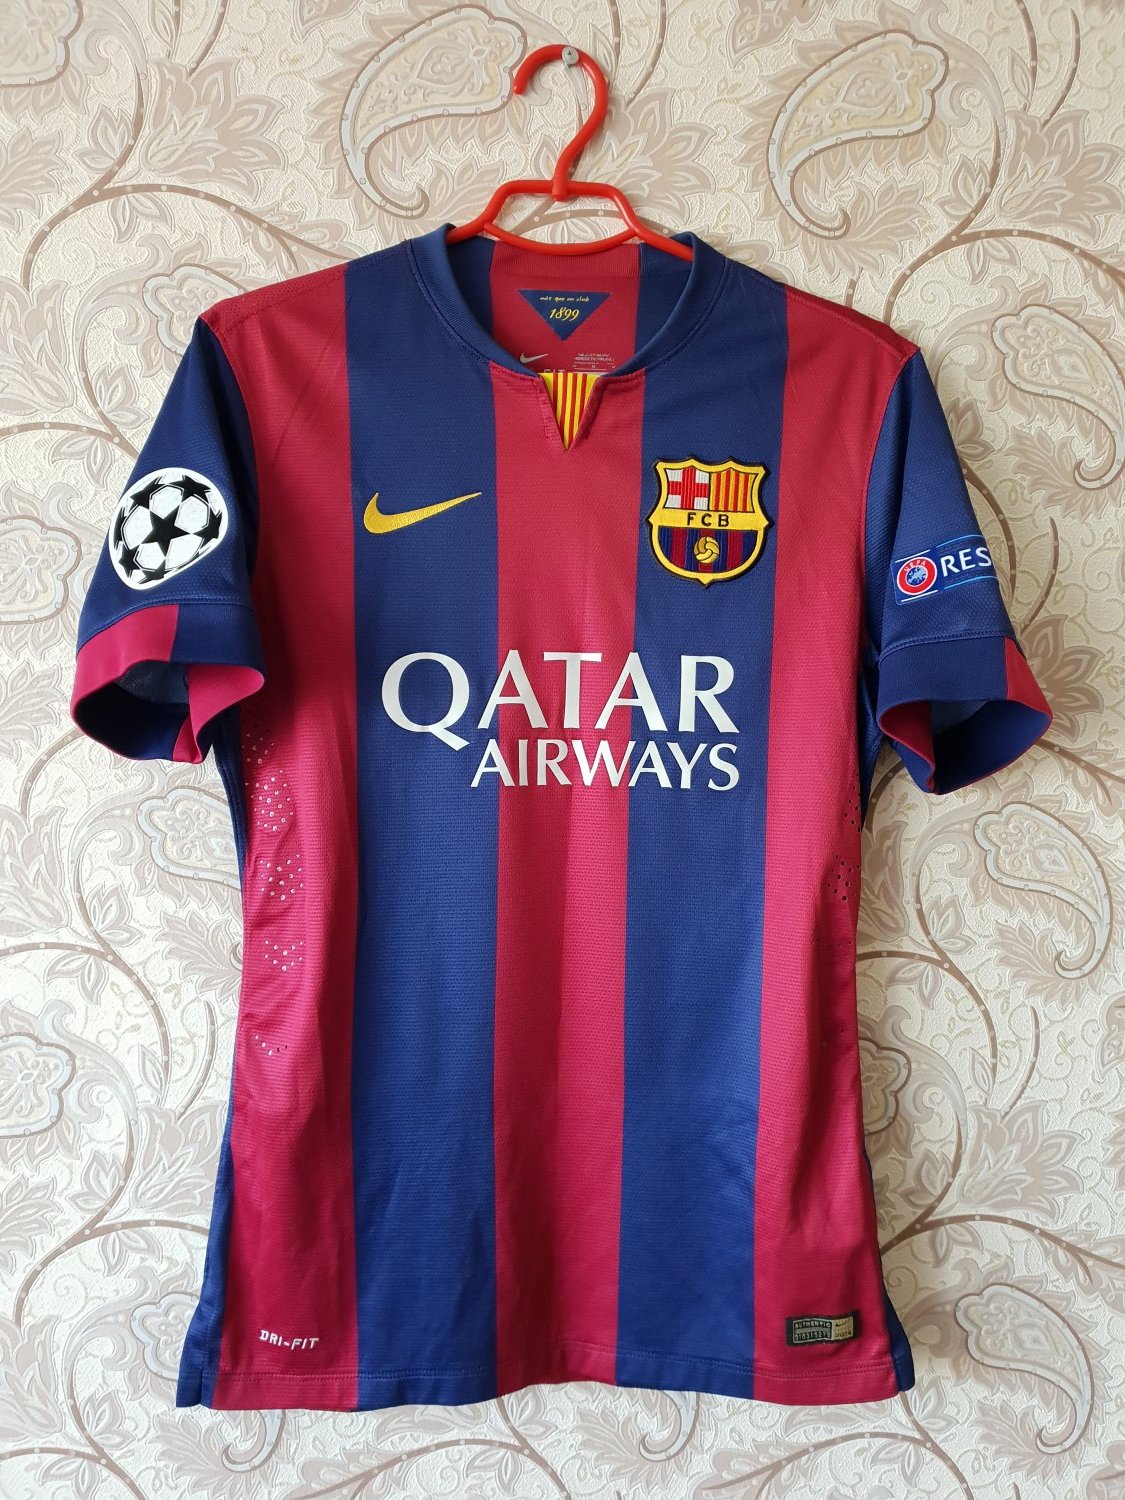 Barcelona Home football shirt 2014 - 2015. Sponsored by Qatar Airways